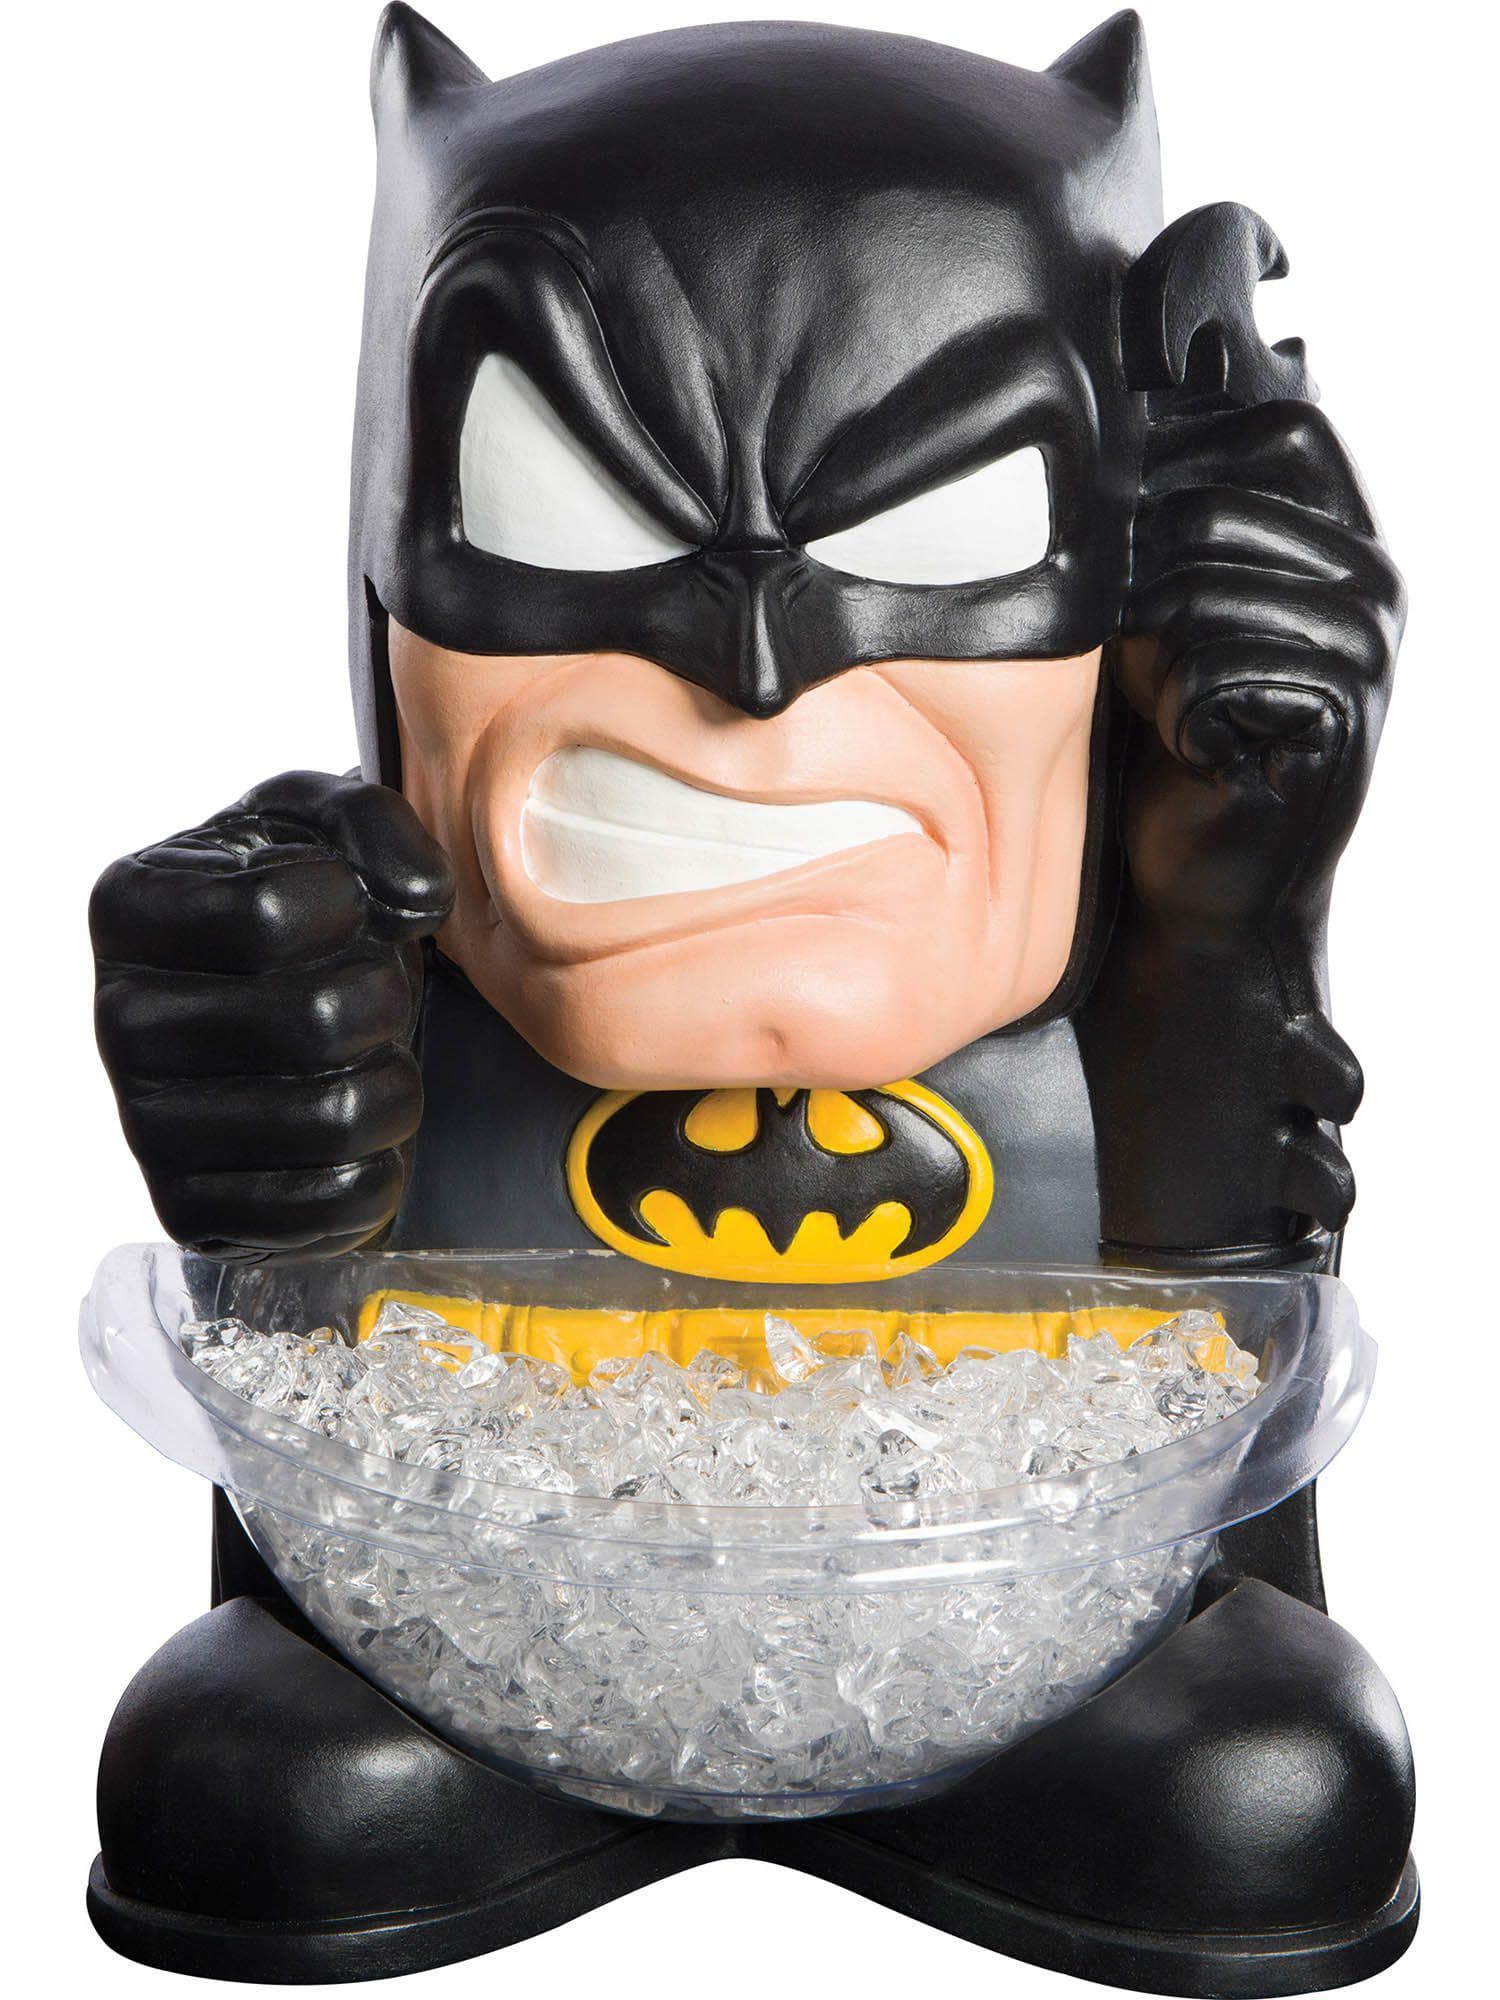 14.5-inch Batman Candy Bowl - costumes.com